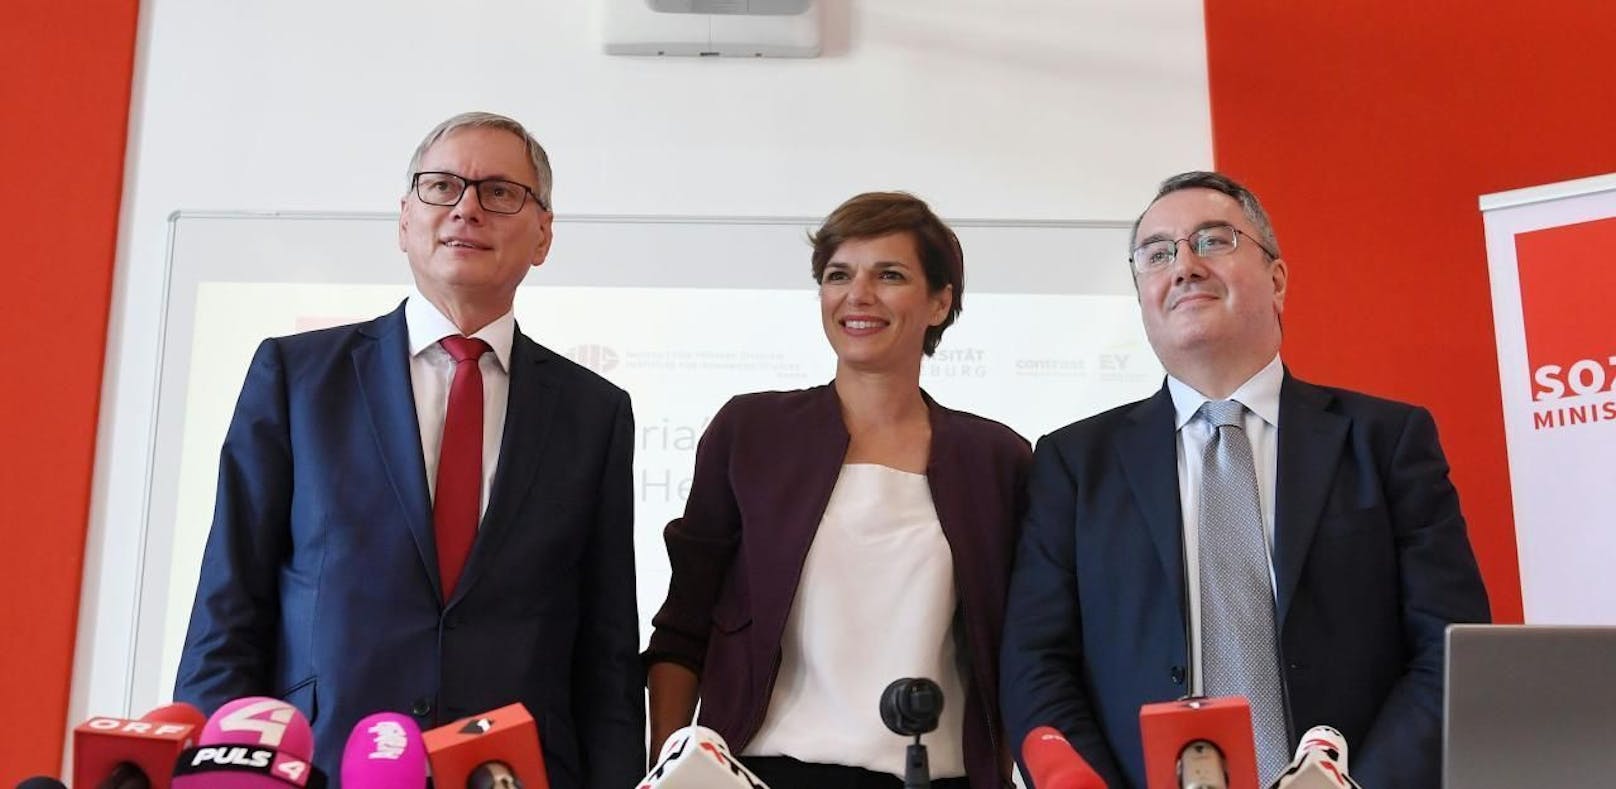 Sozialminister Alois Stöger (SPÖ), Gesundheitsministerin Pamela Rendi-Wagner (SPÖ) und Univ. Prof. Elias Mossialos (London School of Economics) 